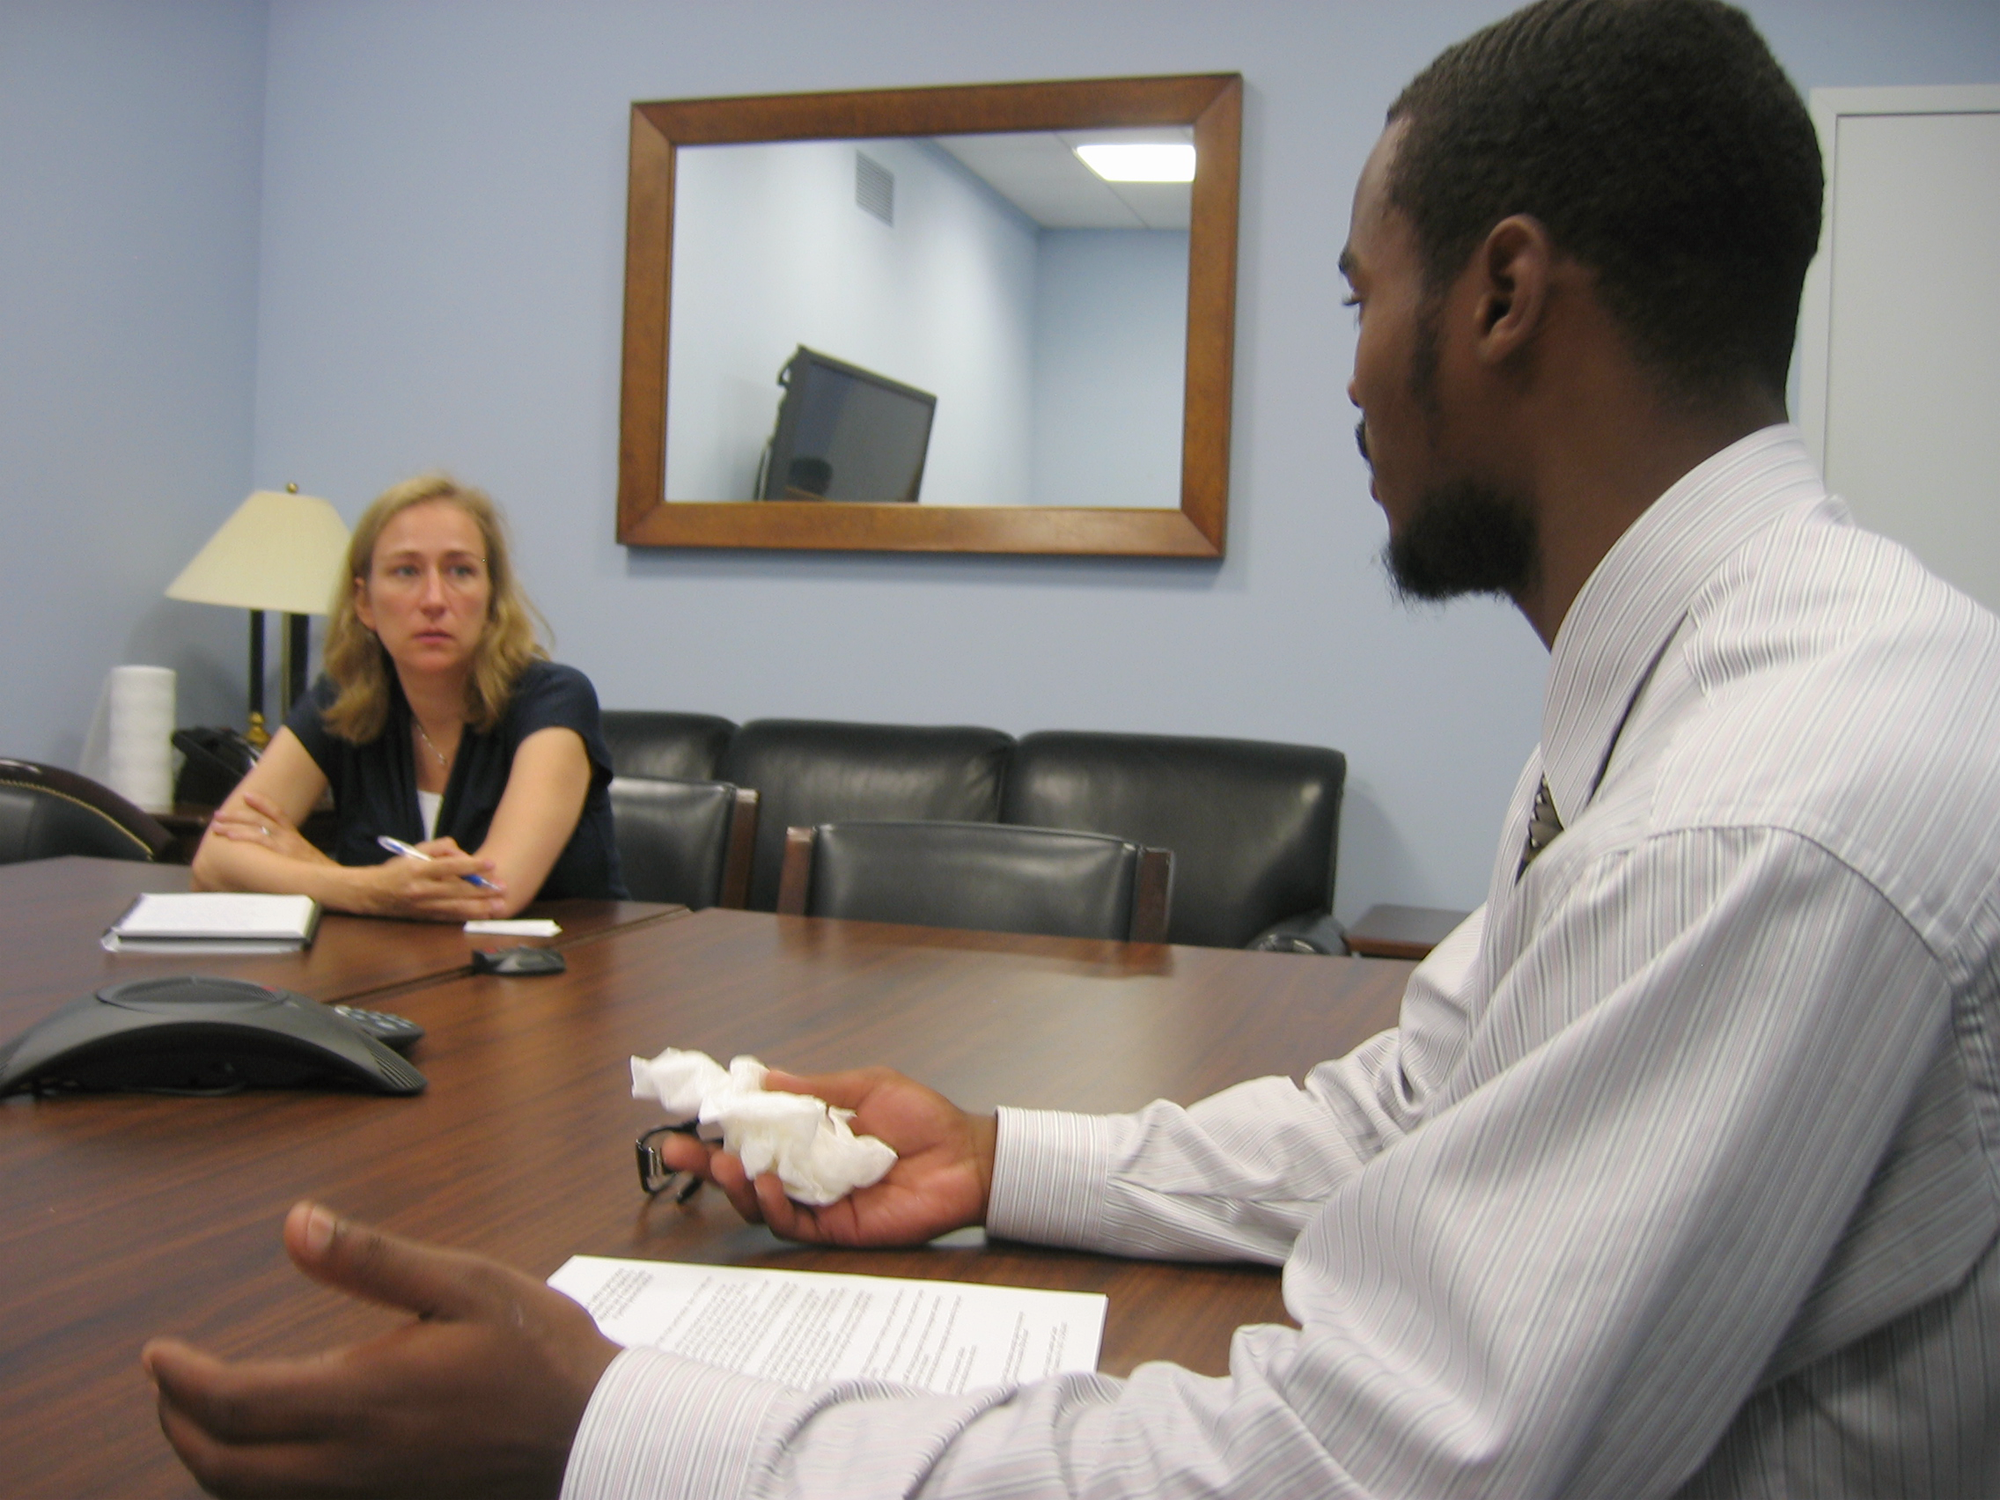 Youth advocate speaking with U.S. Senate staff.